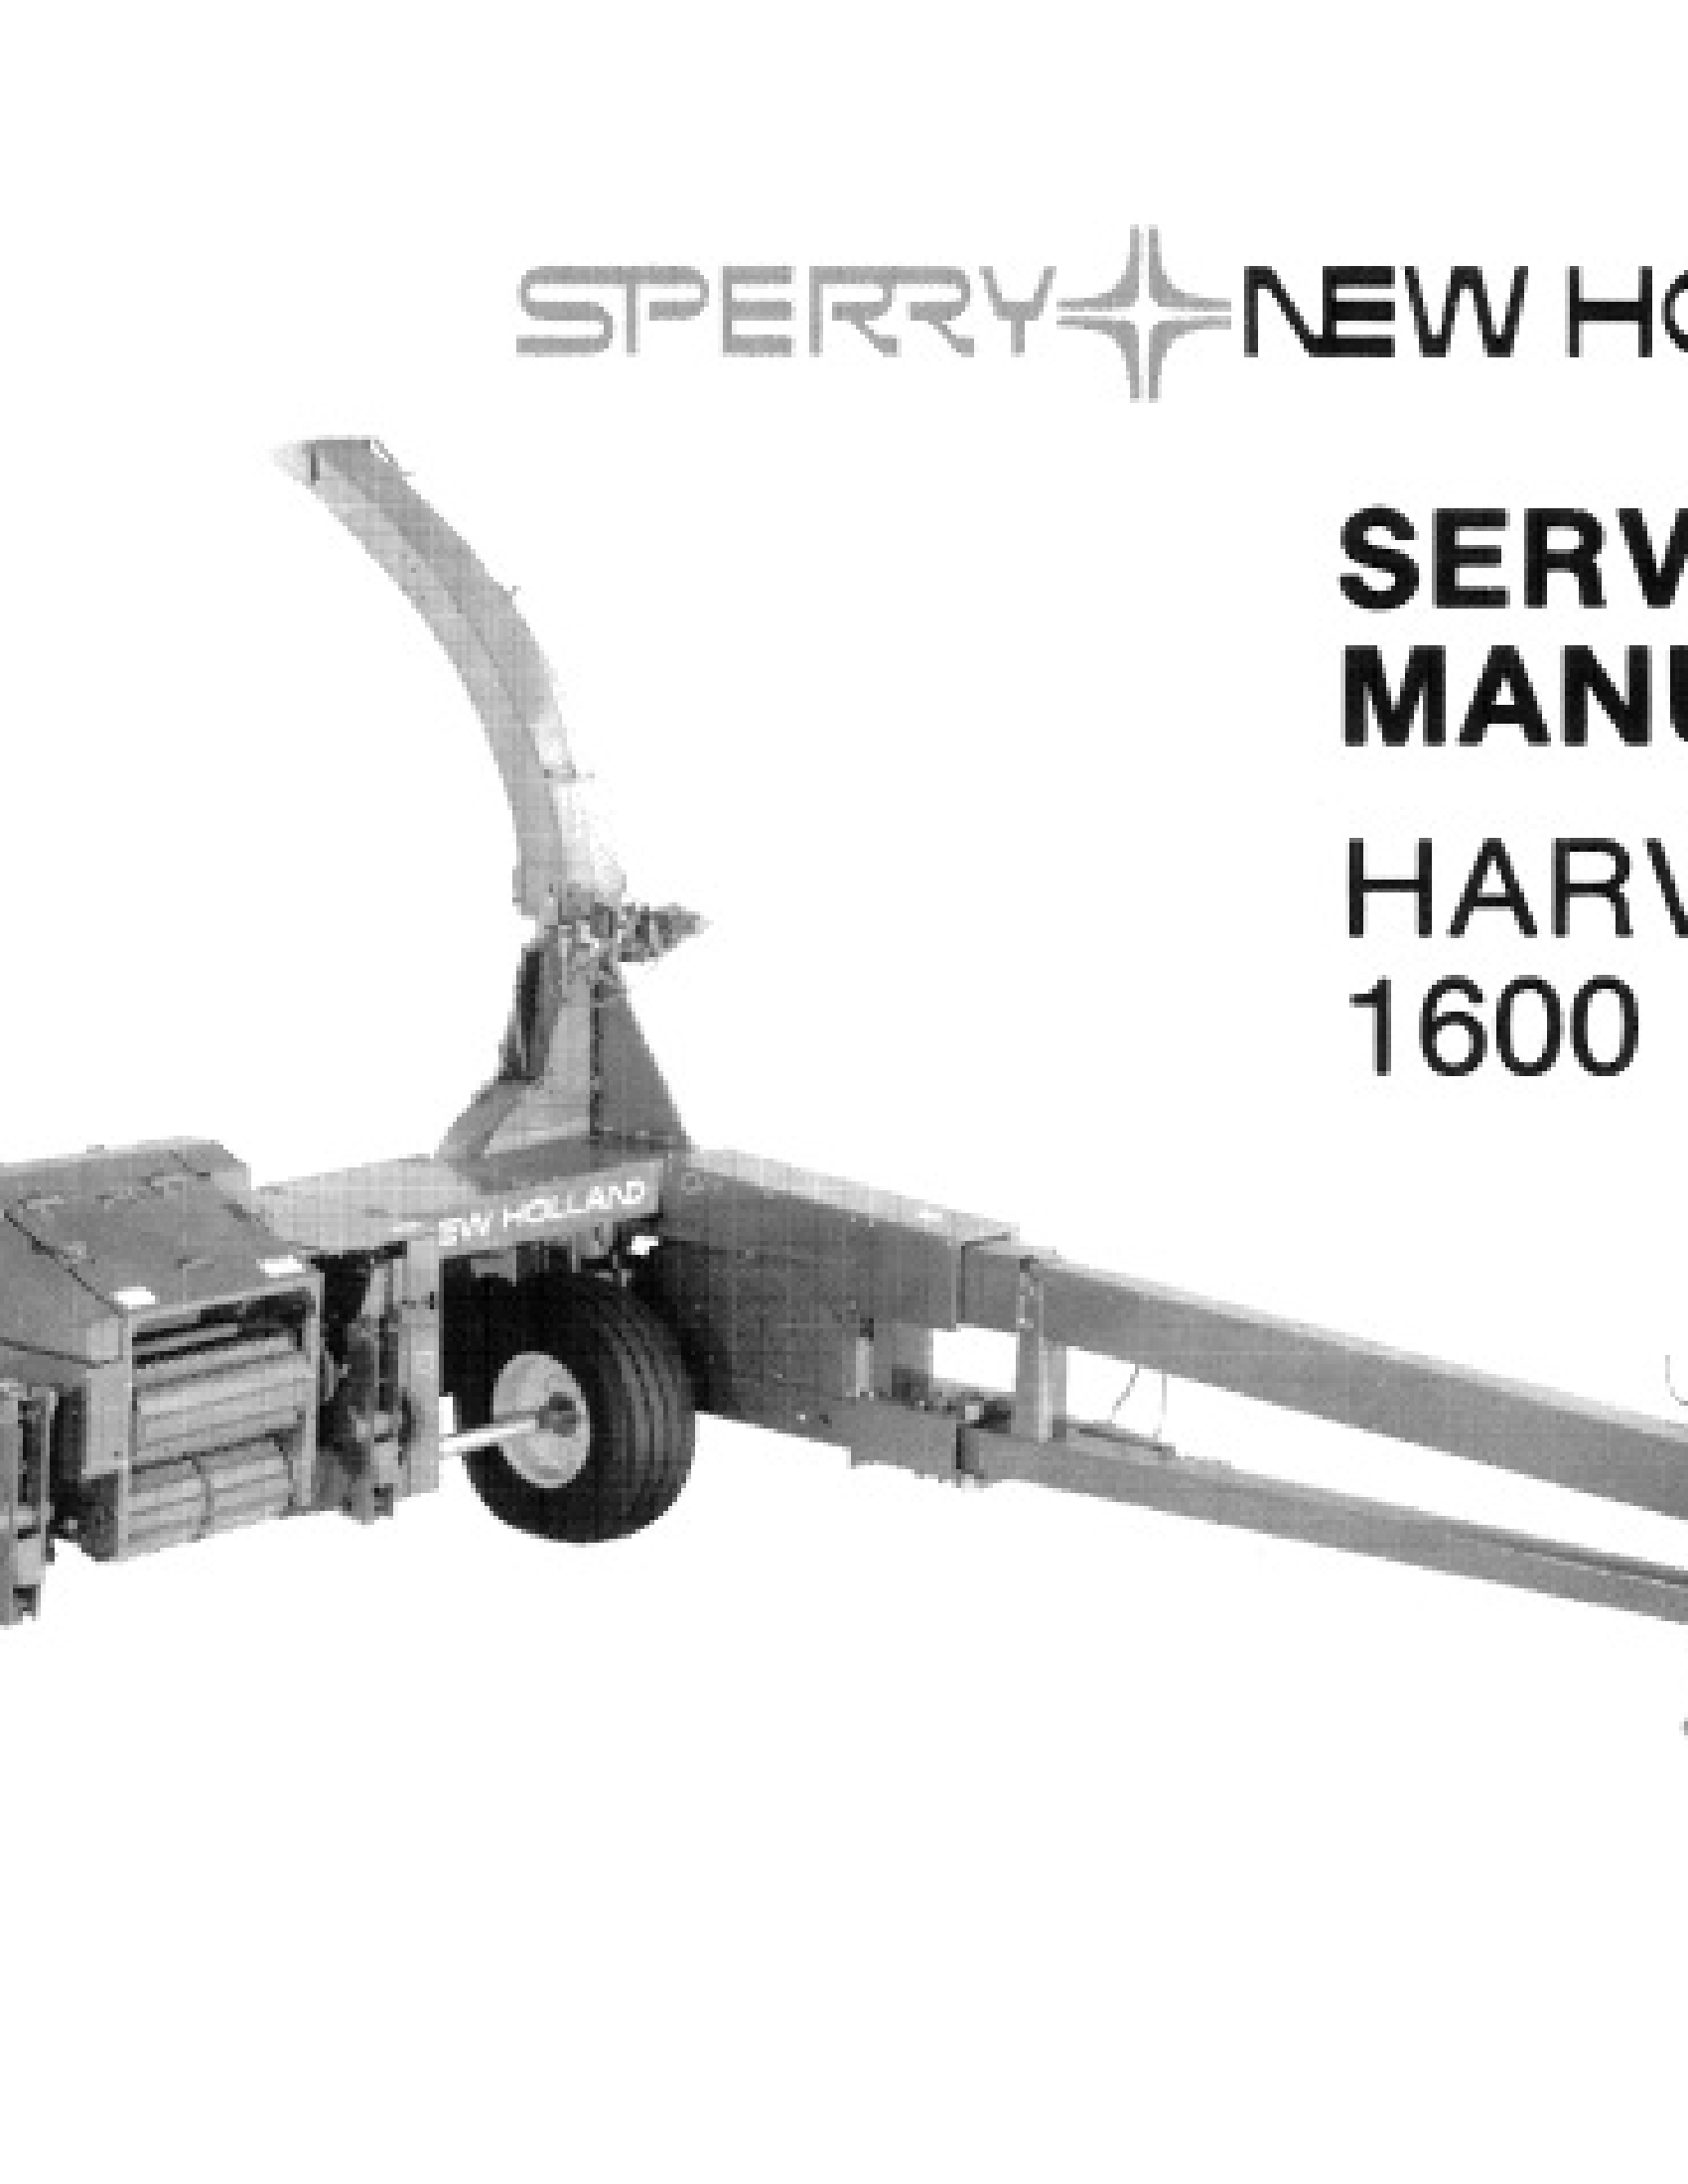 New Holland 1600 Harvester manual